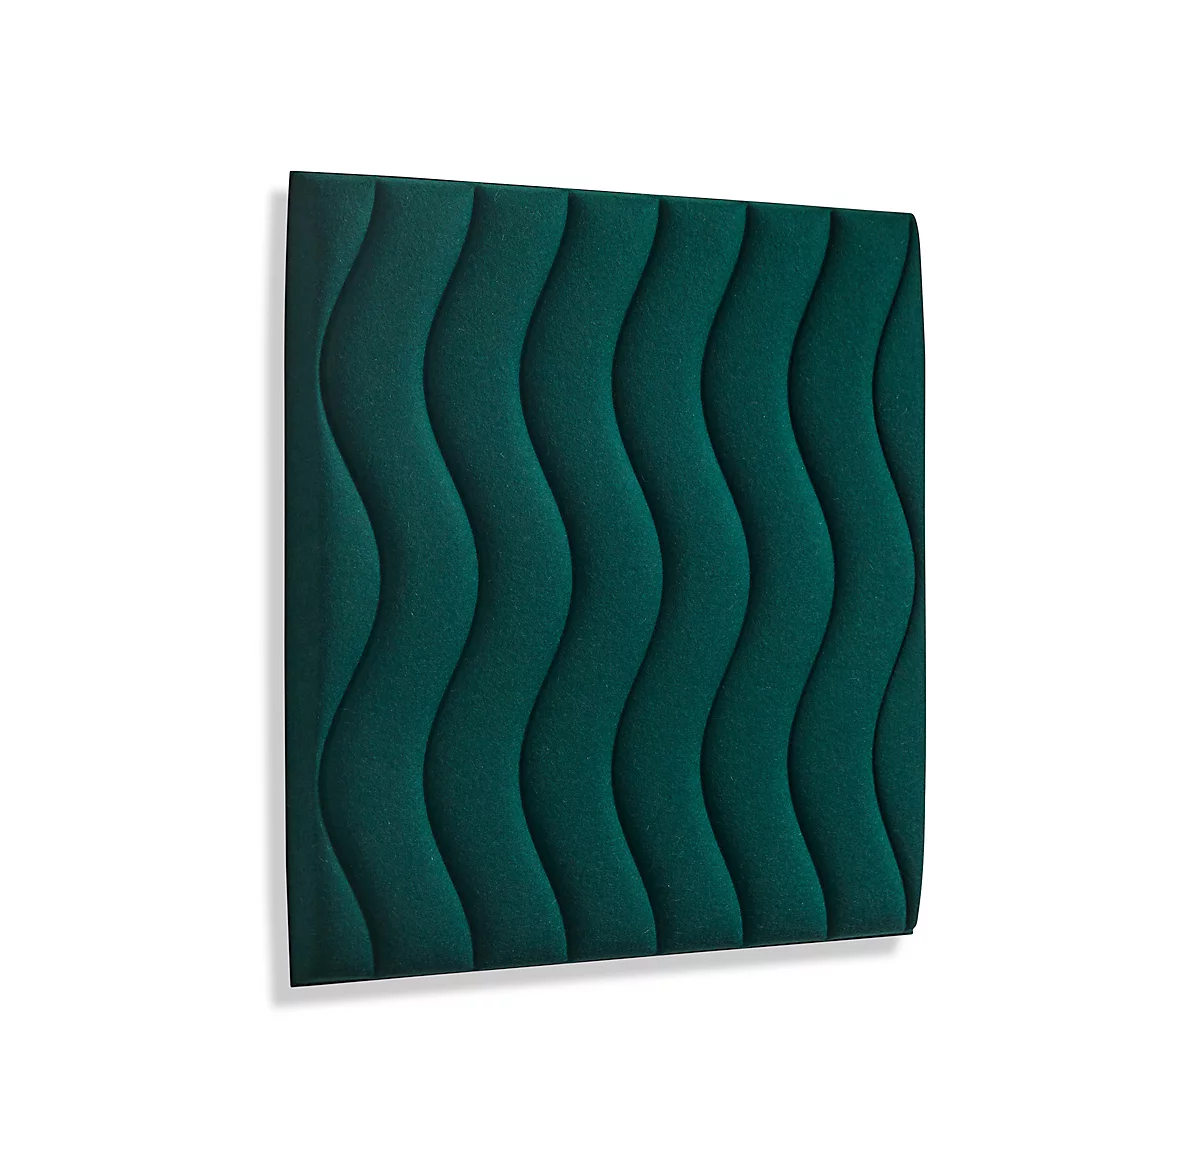 Wandpaneele m. Magnetbefestigung, B 604 x T 604 x H 47 mm, versch. Waves-Design, tannengrün